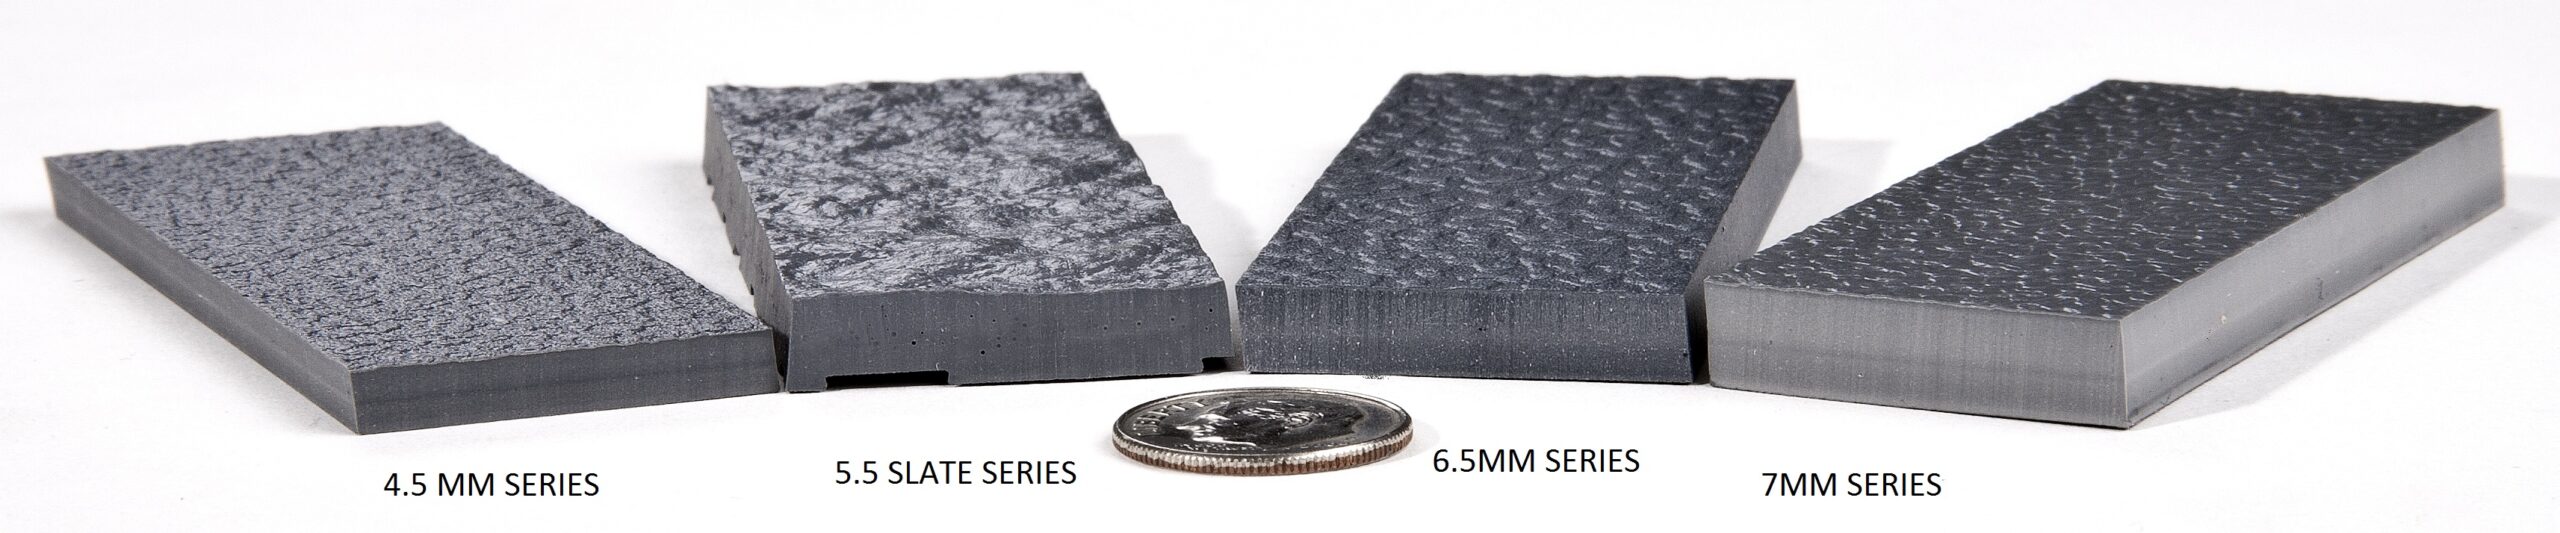 Supratile Product Range- Coin pattern flooring